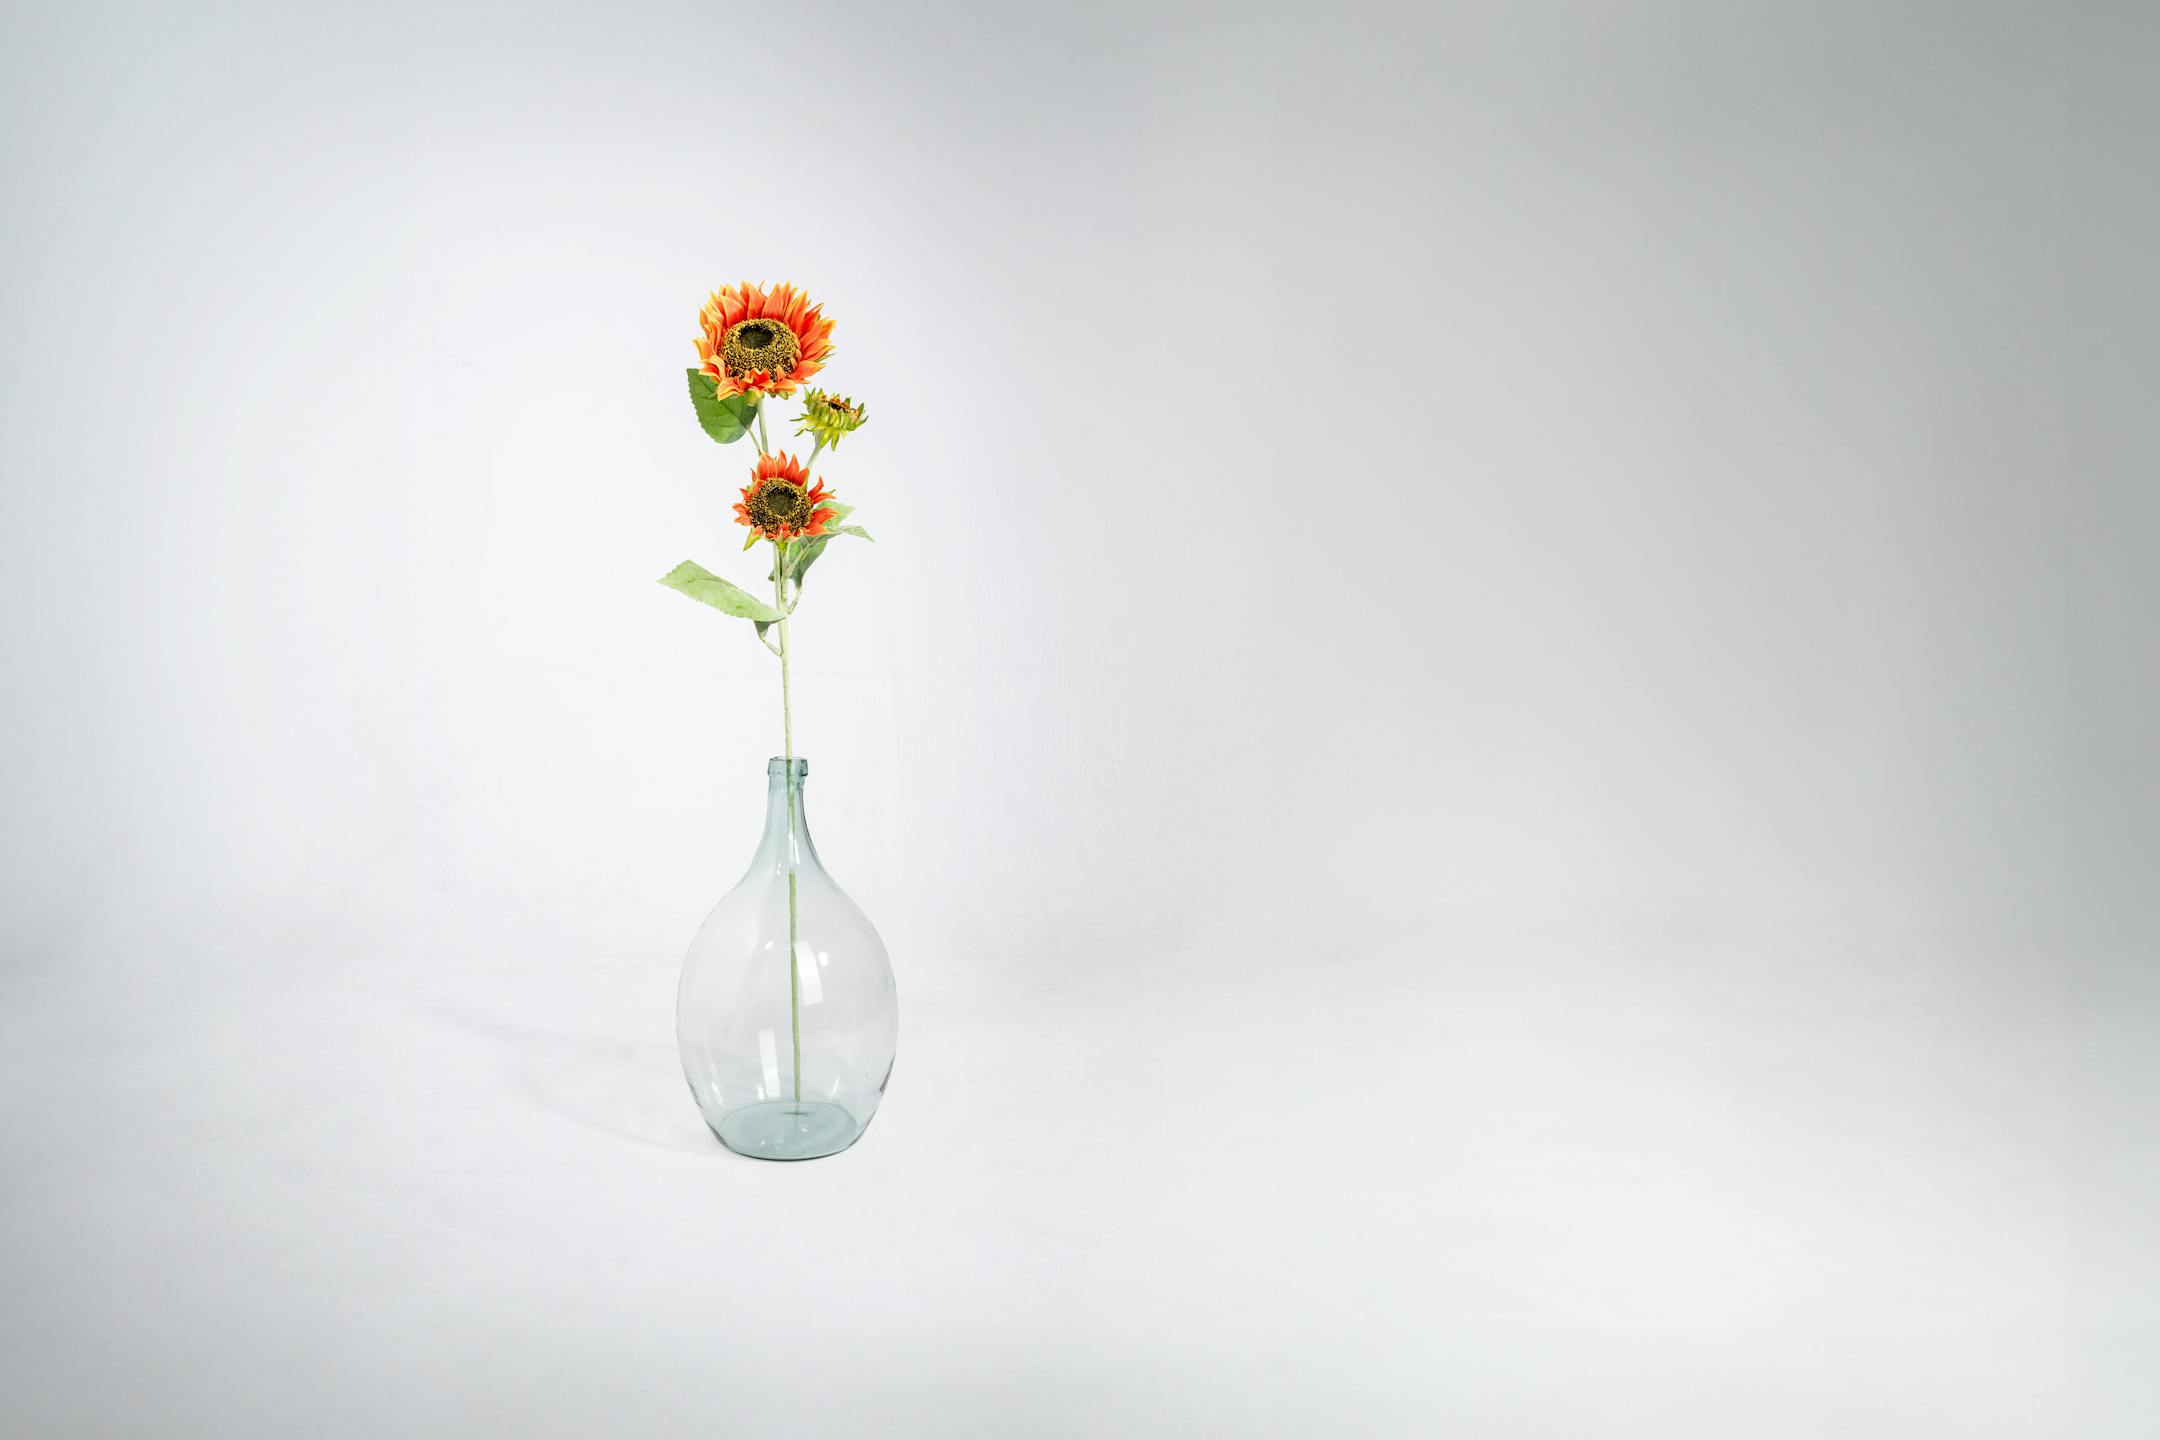 Triple orange artificial sunflower stem in glass vase